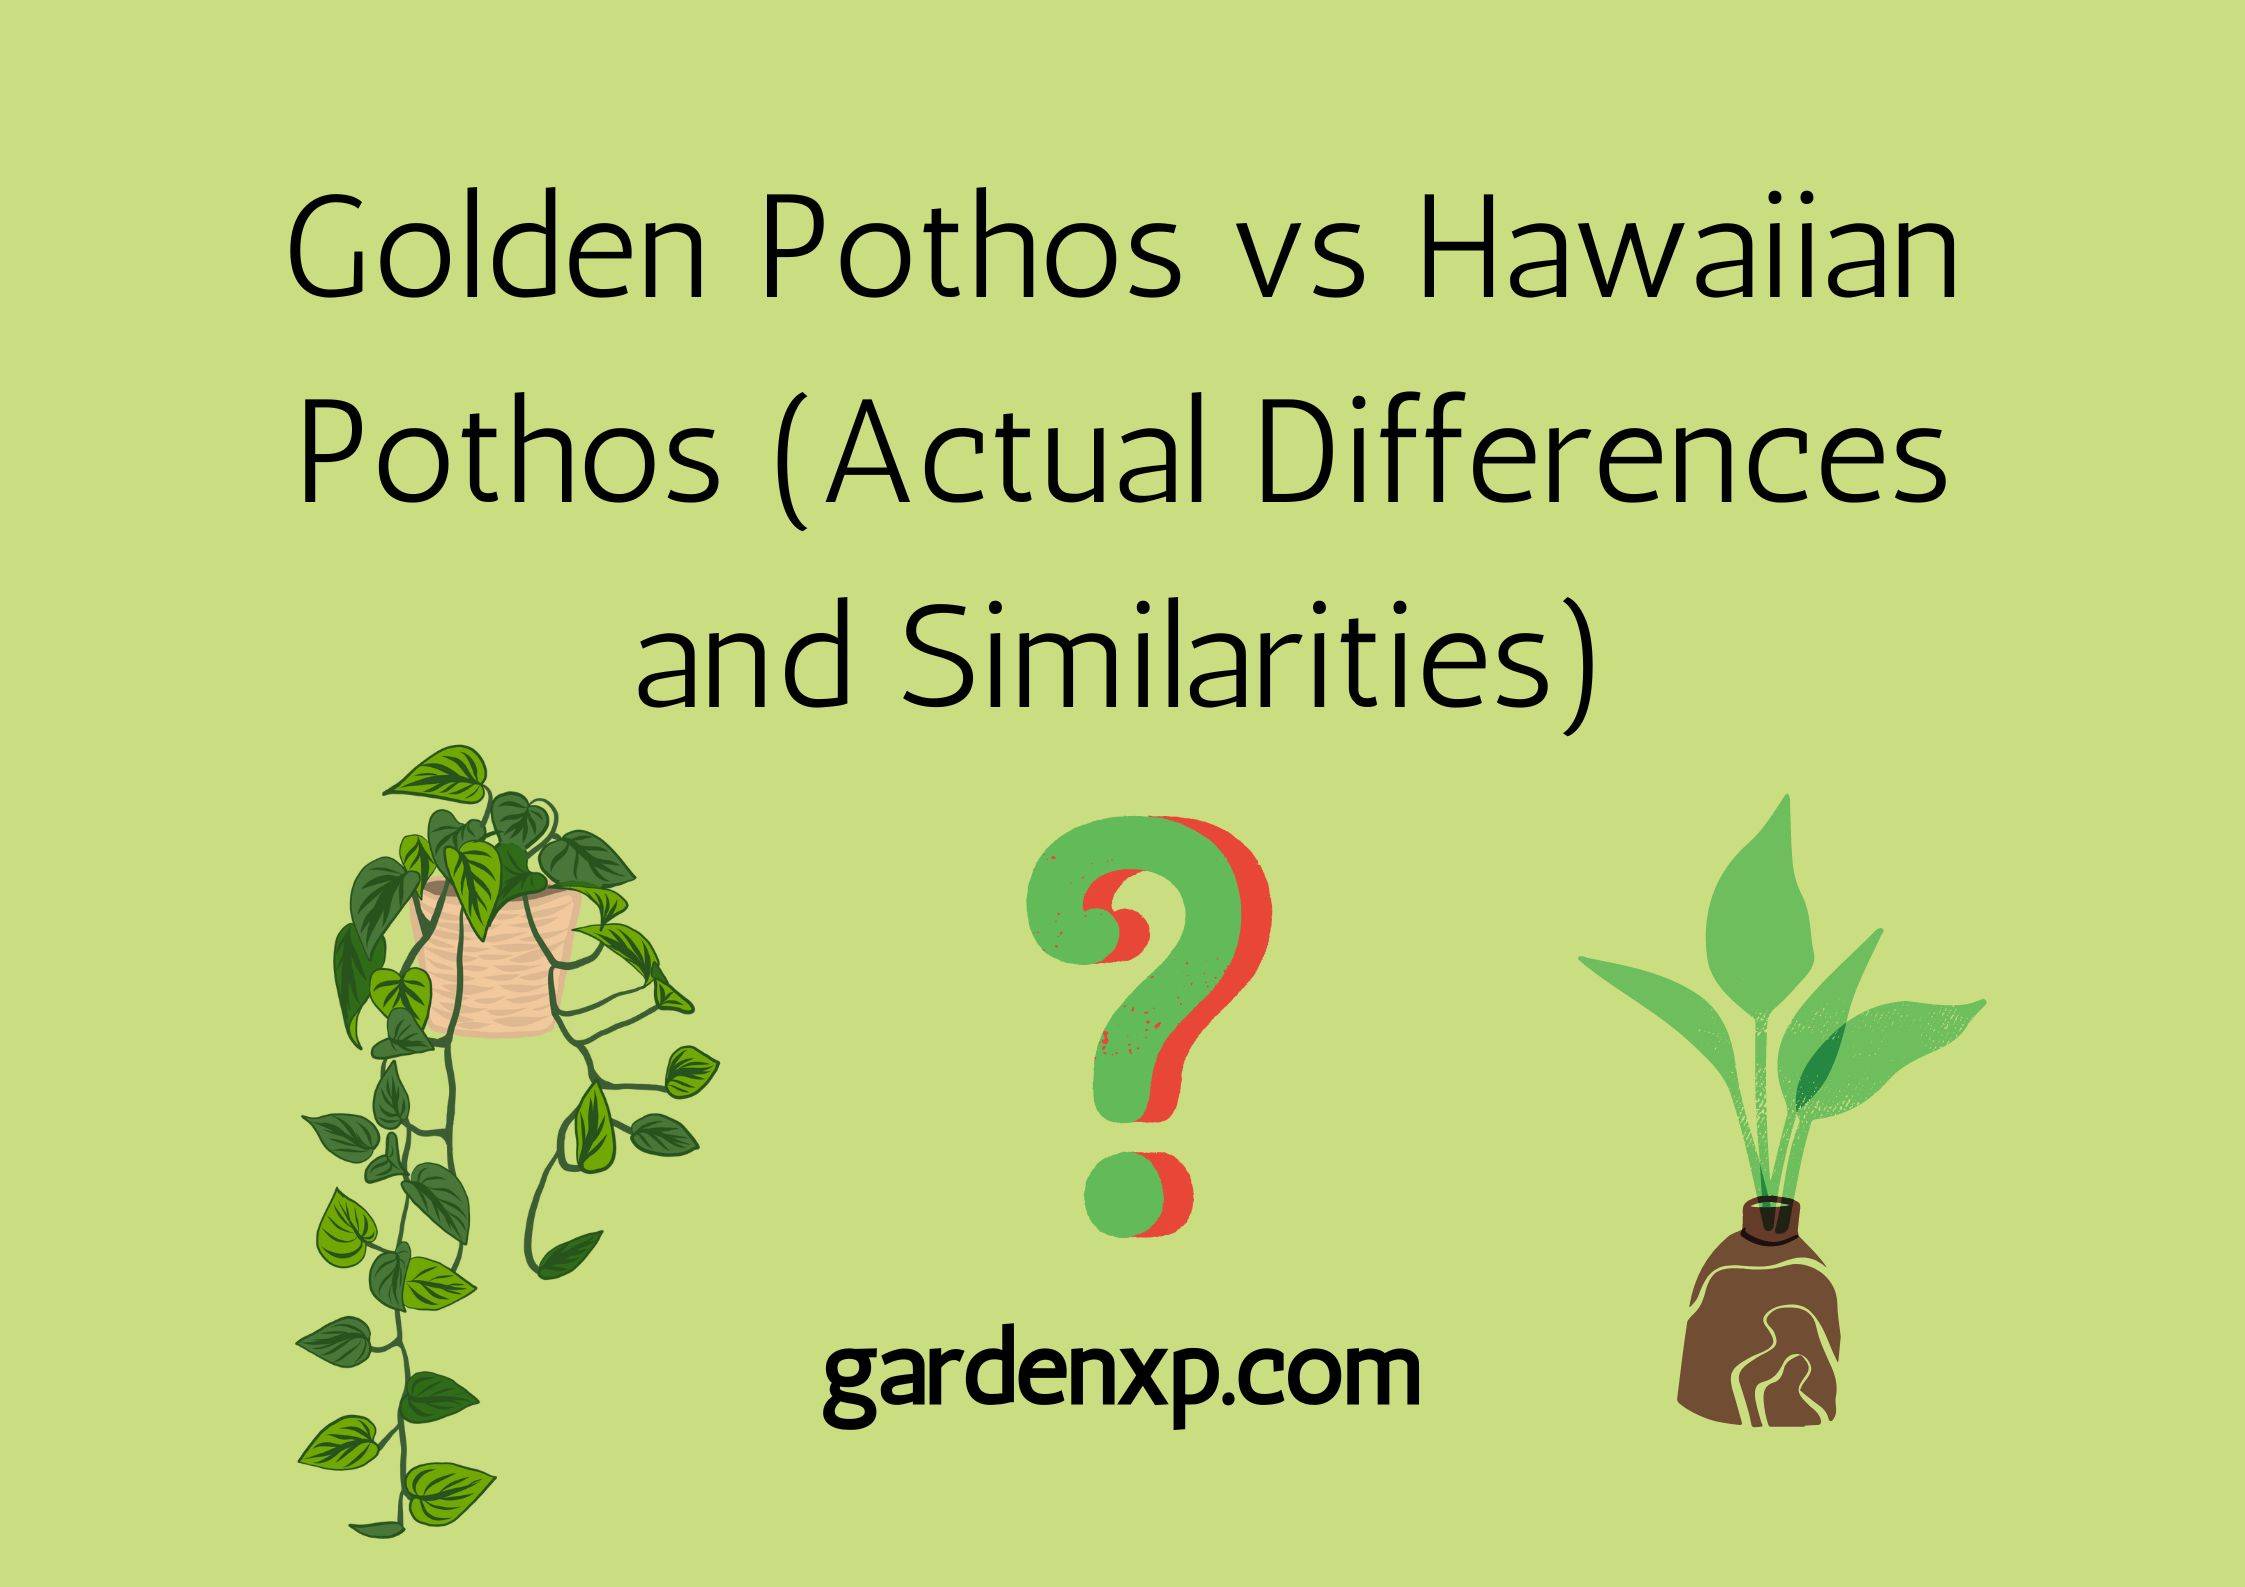 Golden Pothos vs Hawaiian Pothos (Actual Differences and Similarities)